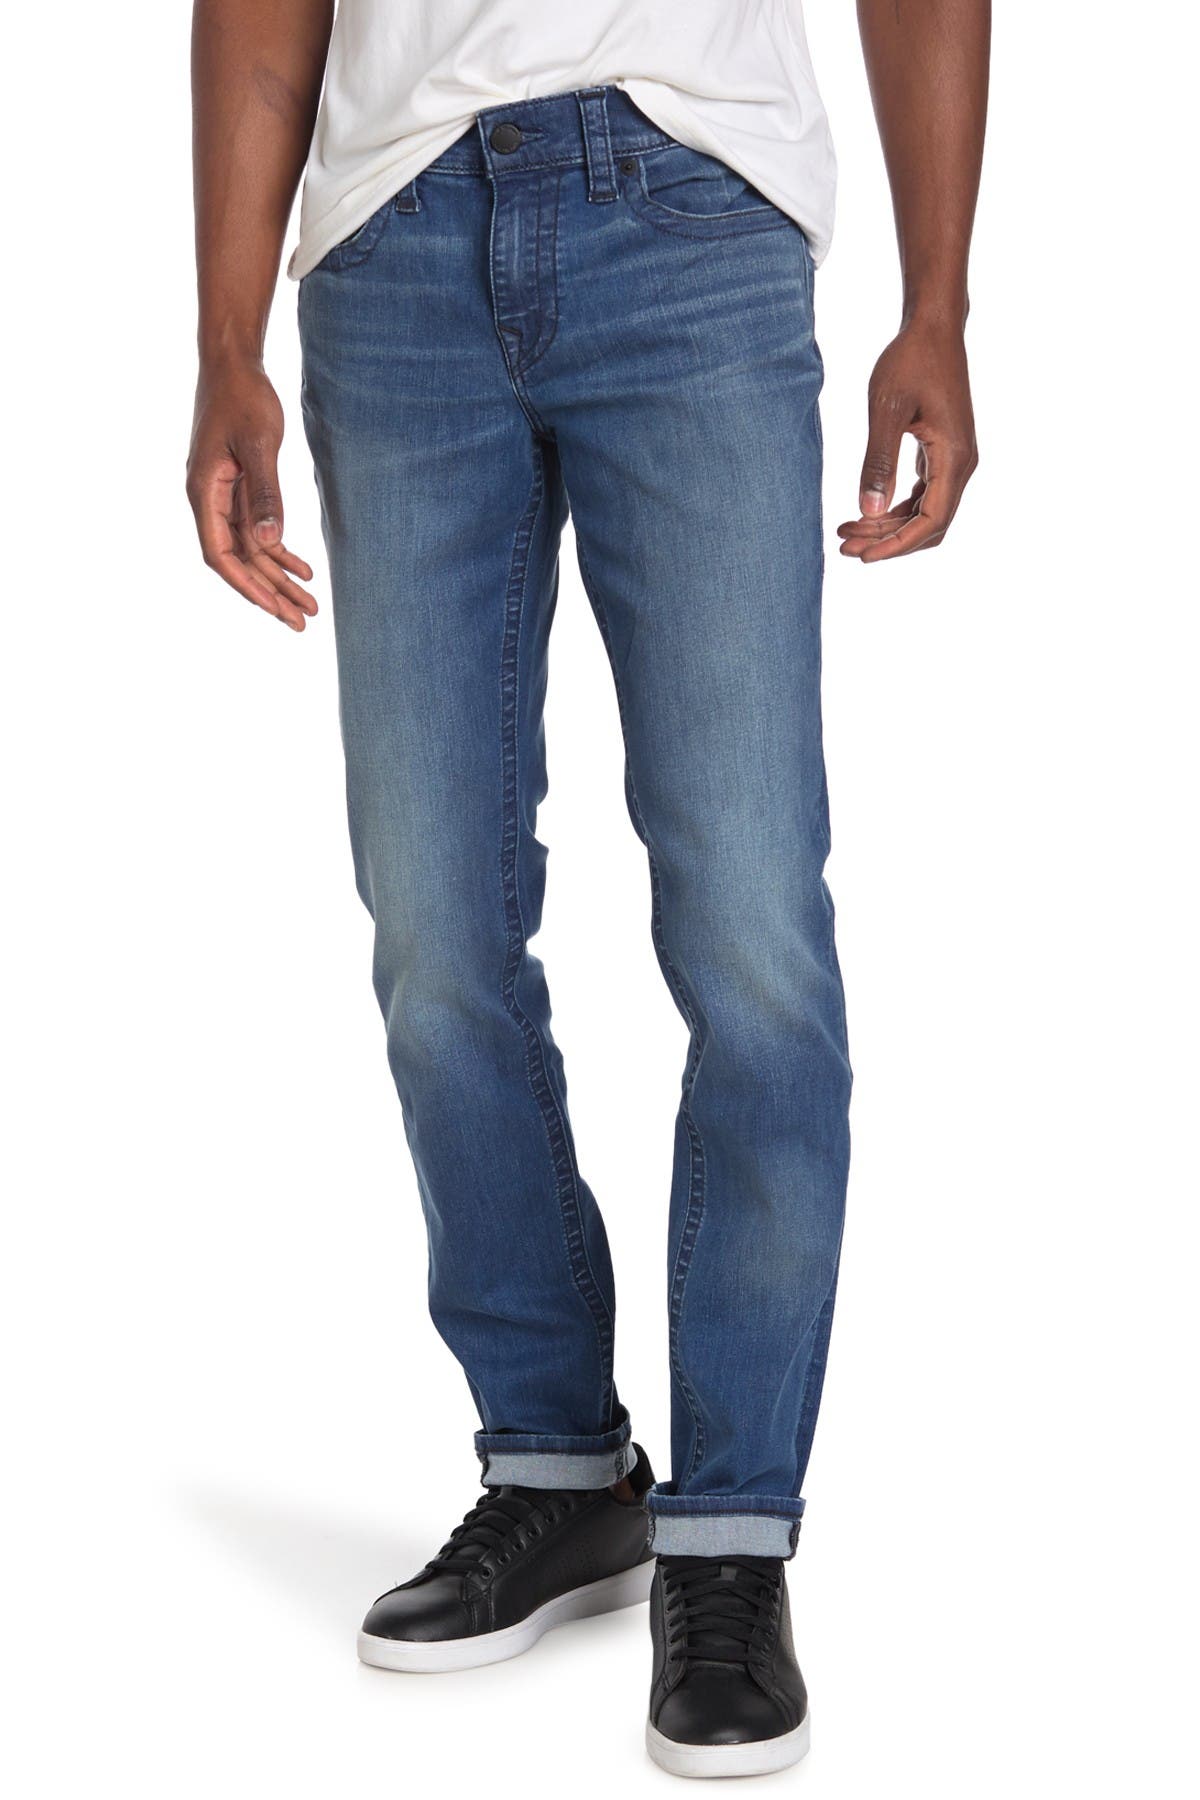 true religion jeans no flap pockets